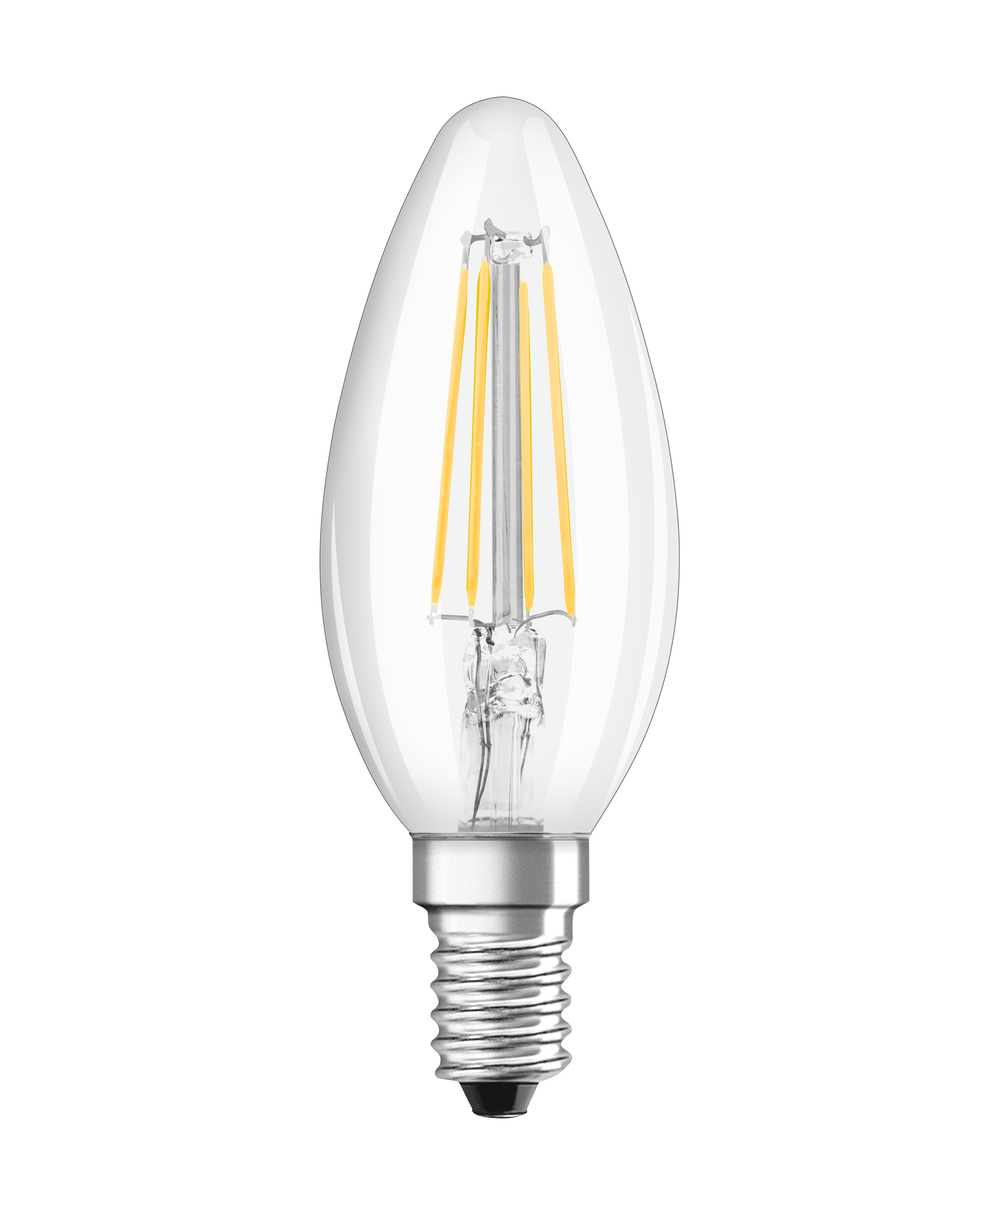 Ledvance LED lamp LED CLASSIC B P 5.5W 827 FIL CL E14 – 4099854062308 – replacement for 60 W - 4099854062308